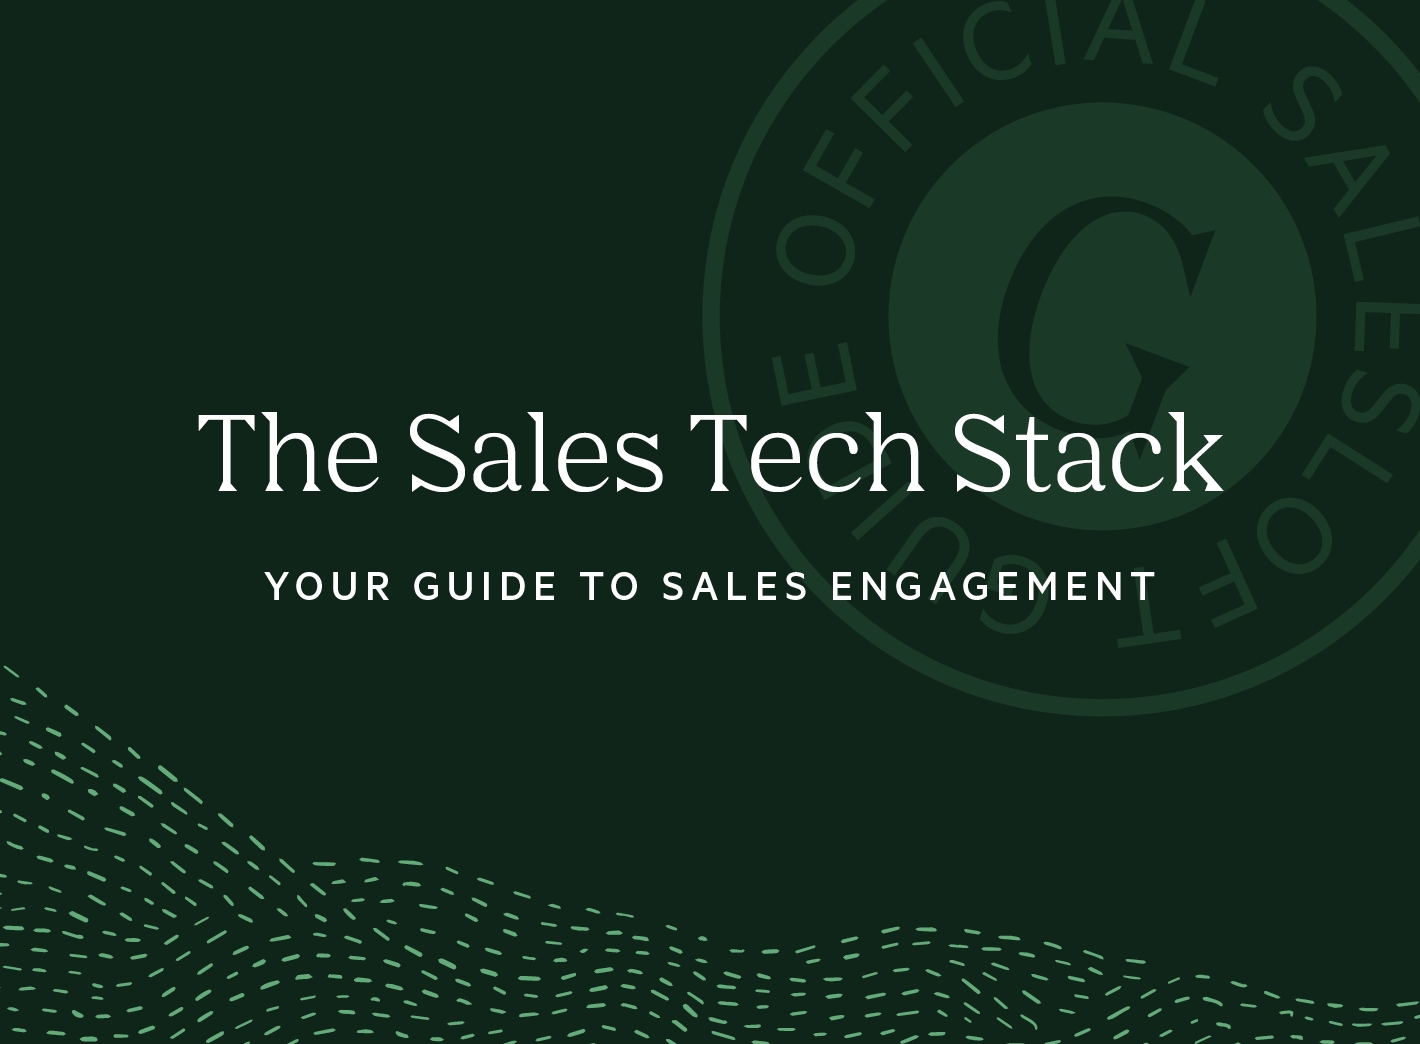 sales tech stack guide header.jpeg